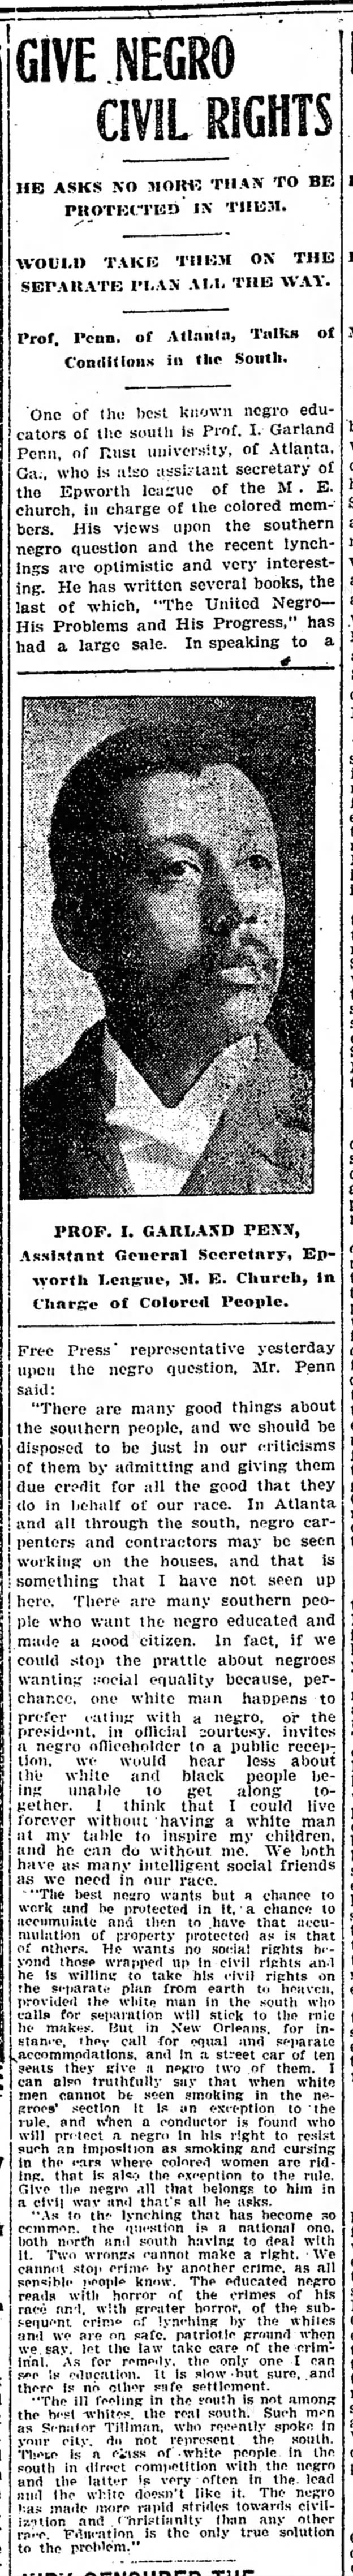 Give Negro Civil Rights, Detroit Free Press (Detroit, Michigan), July 18, 1903, page 12